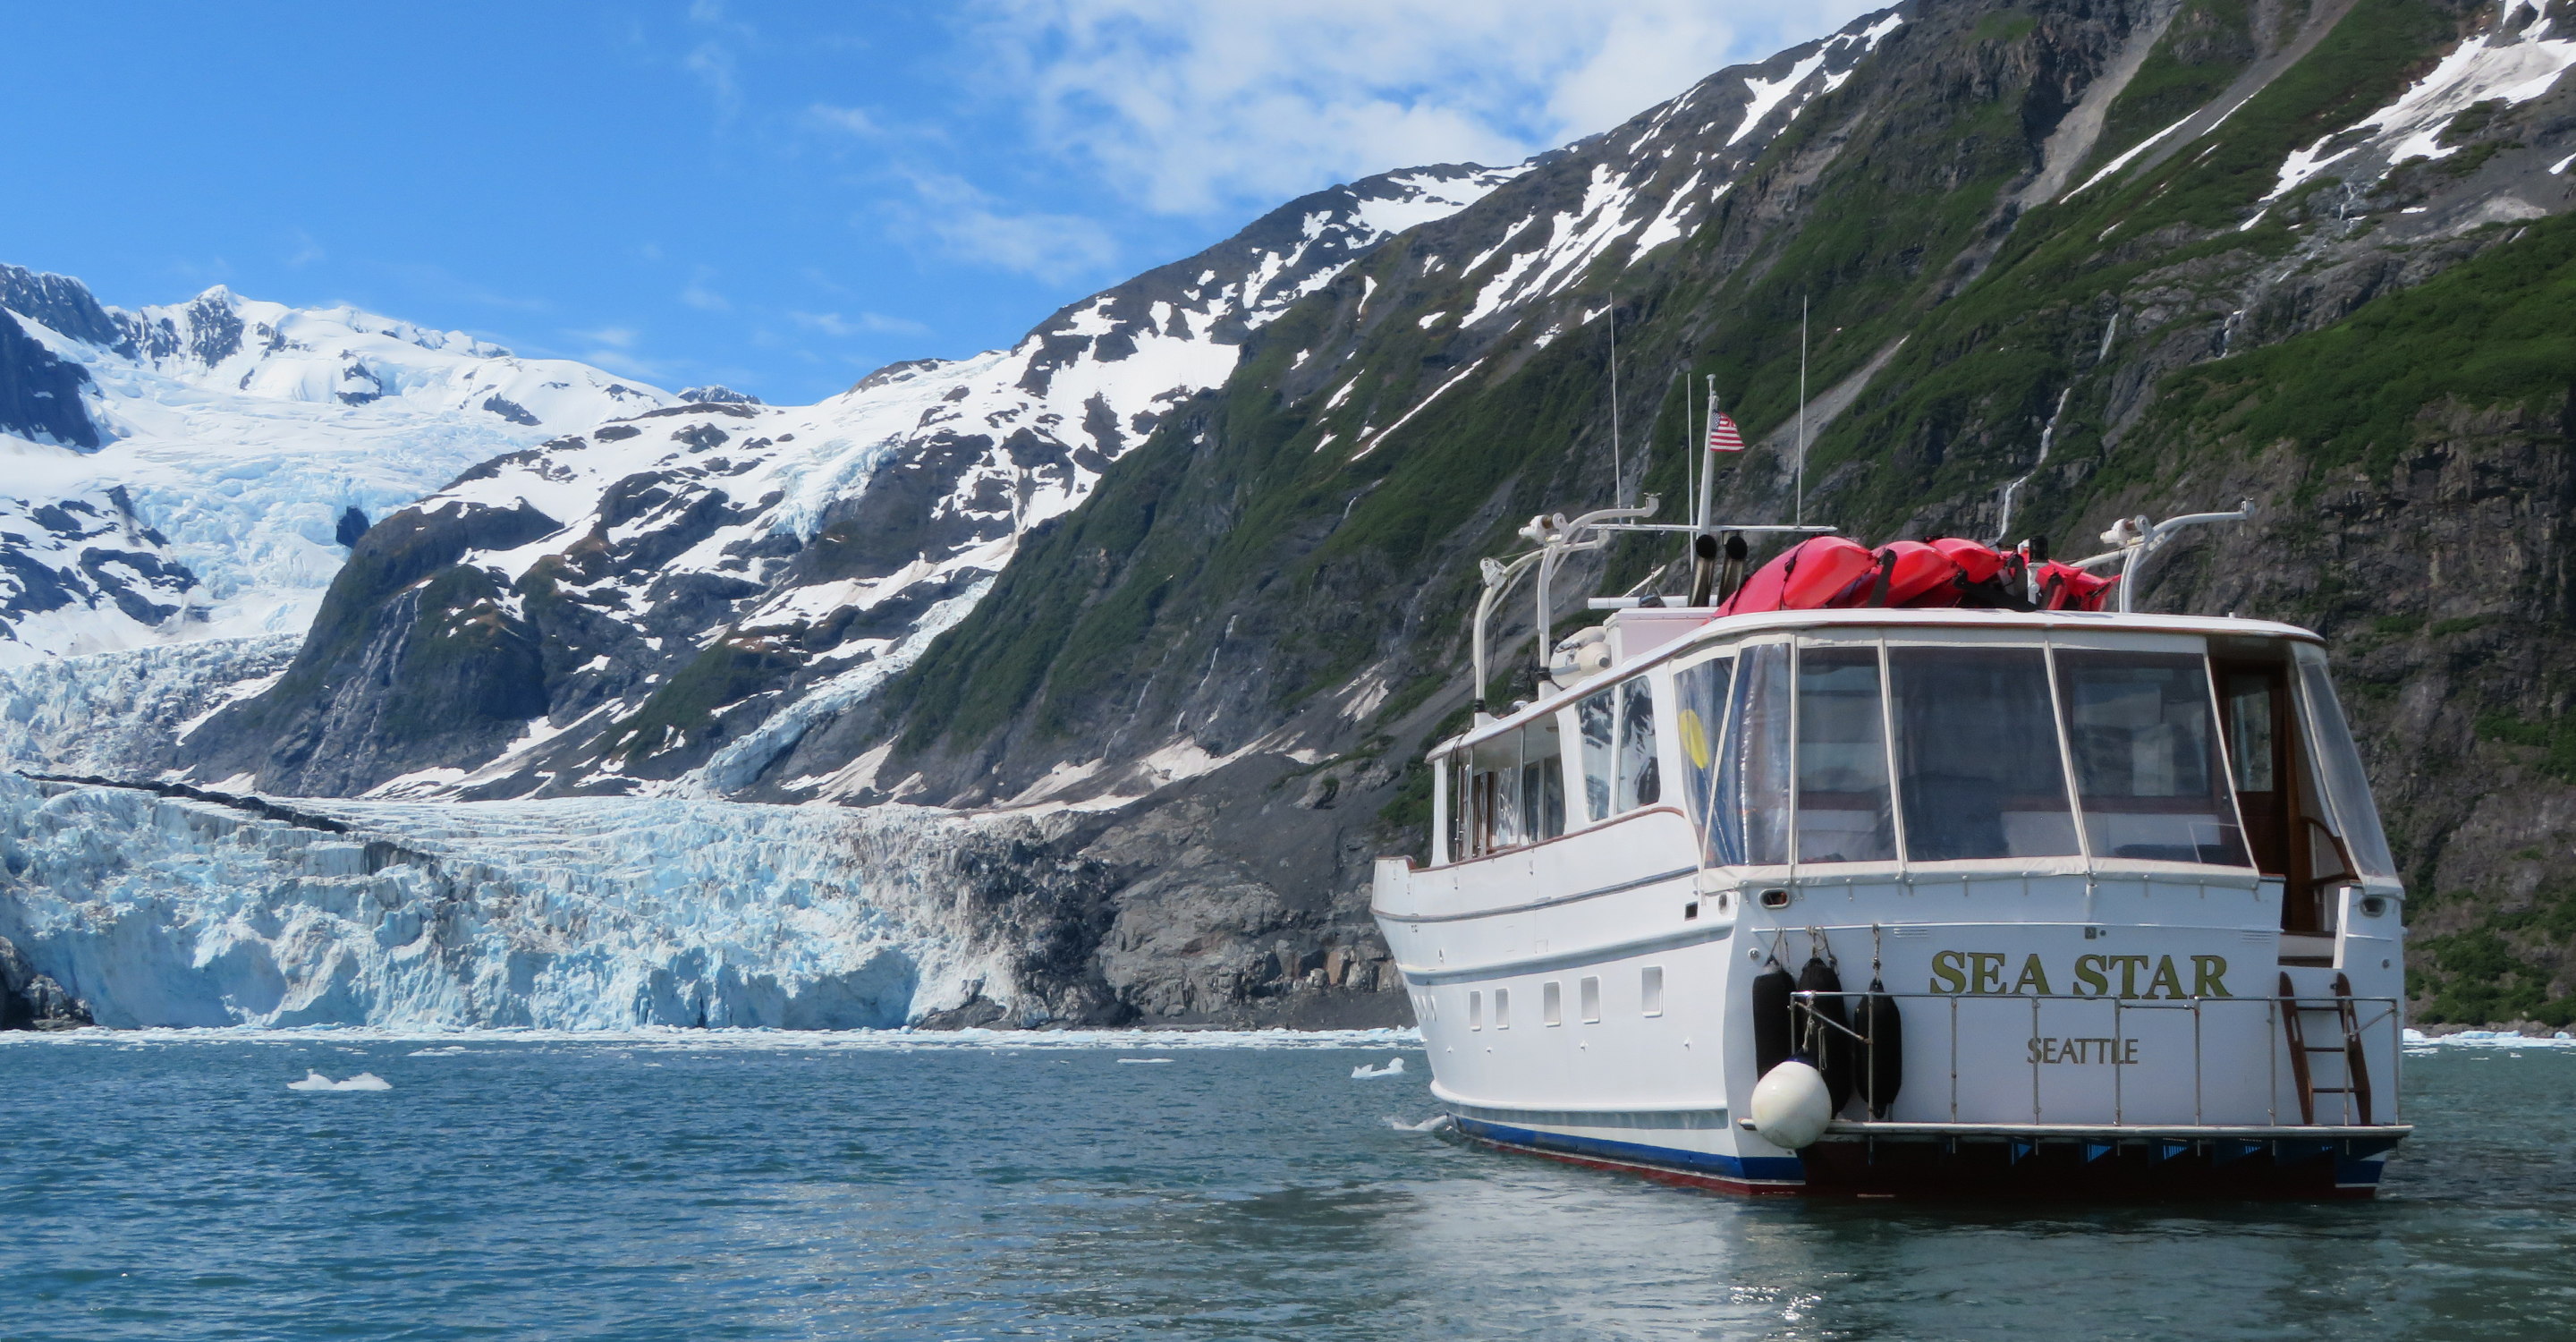 The Sea Star yacht cruises toward a glacier in Prince William Sound, Alaska, USA